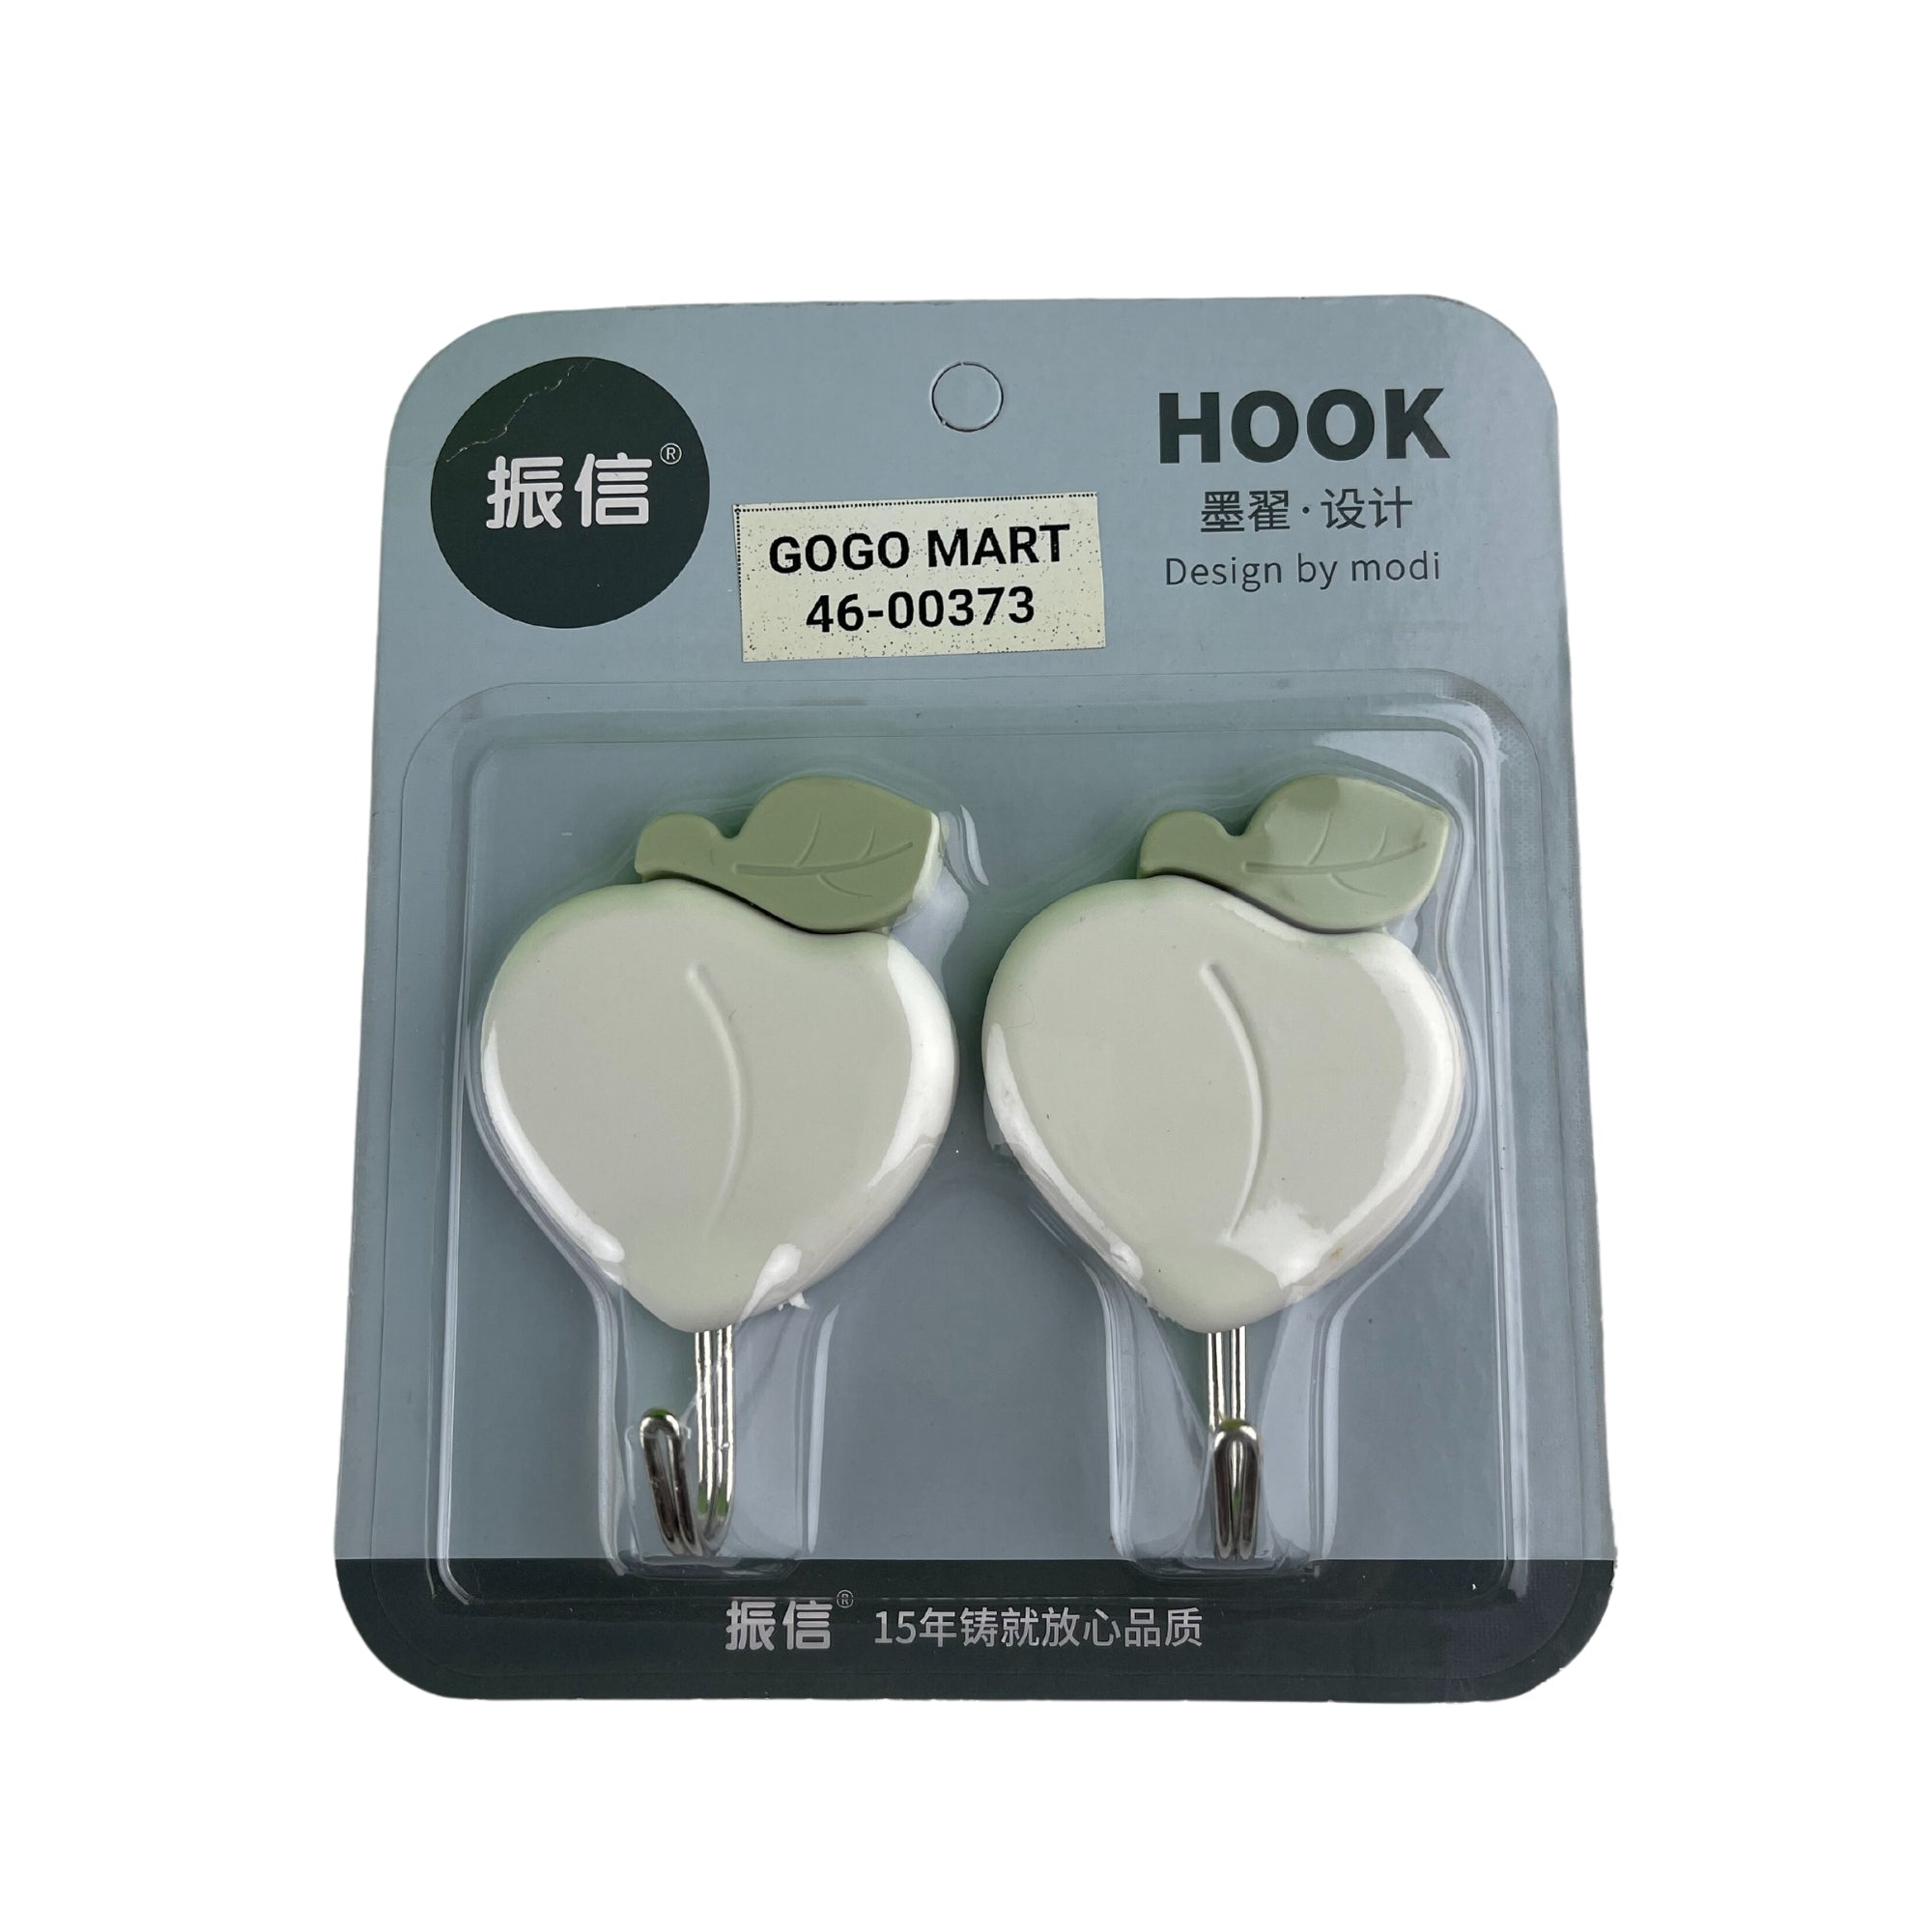 Hook apple shape 2 Pcs Multi- Sticky Kitchen Hooks washroom tiles Key Chain stand gift